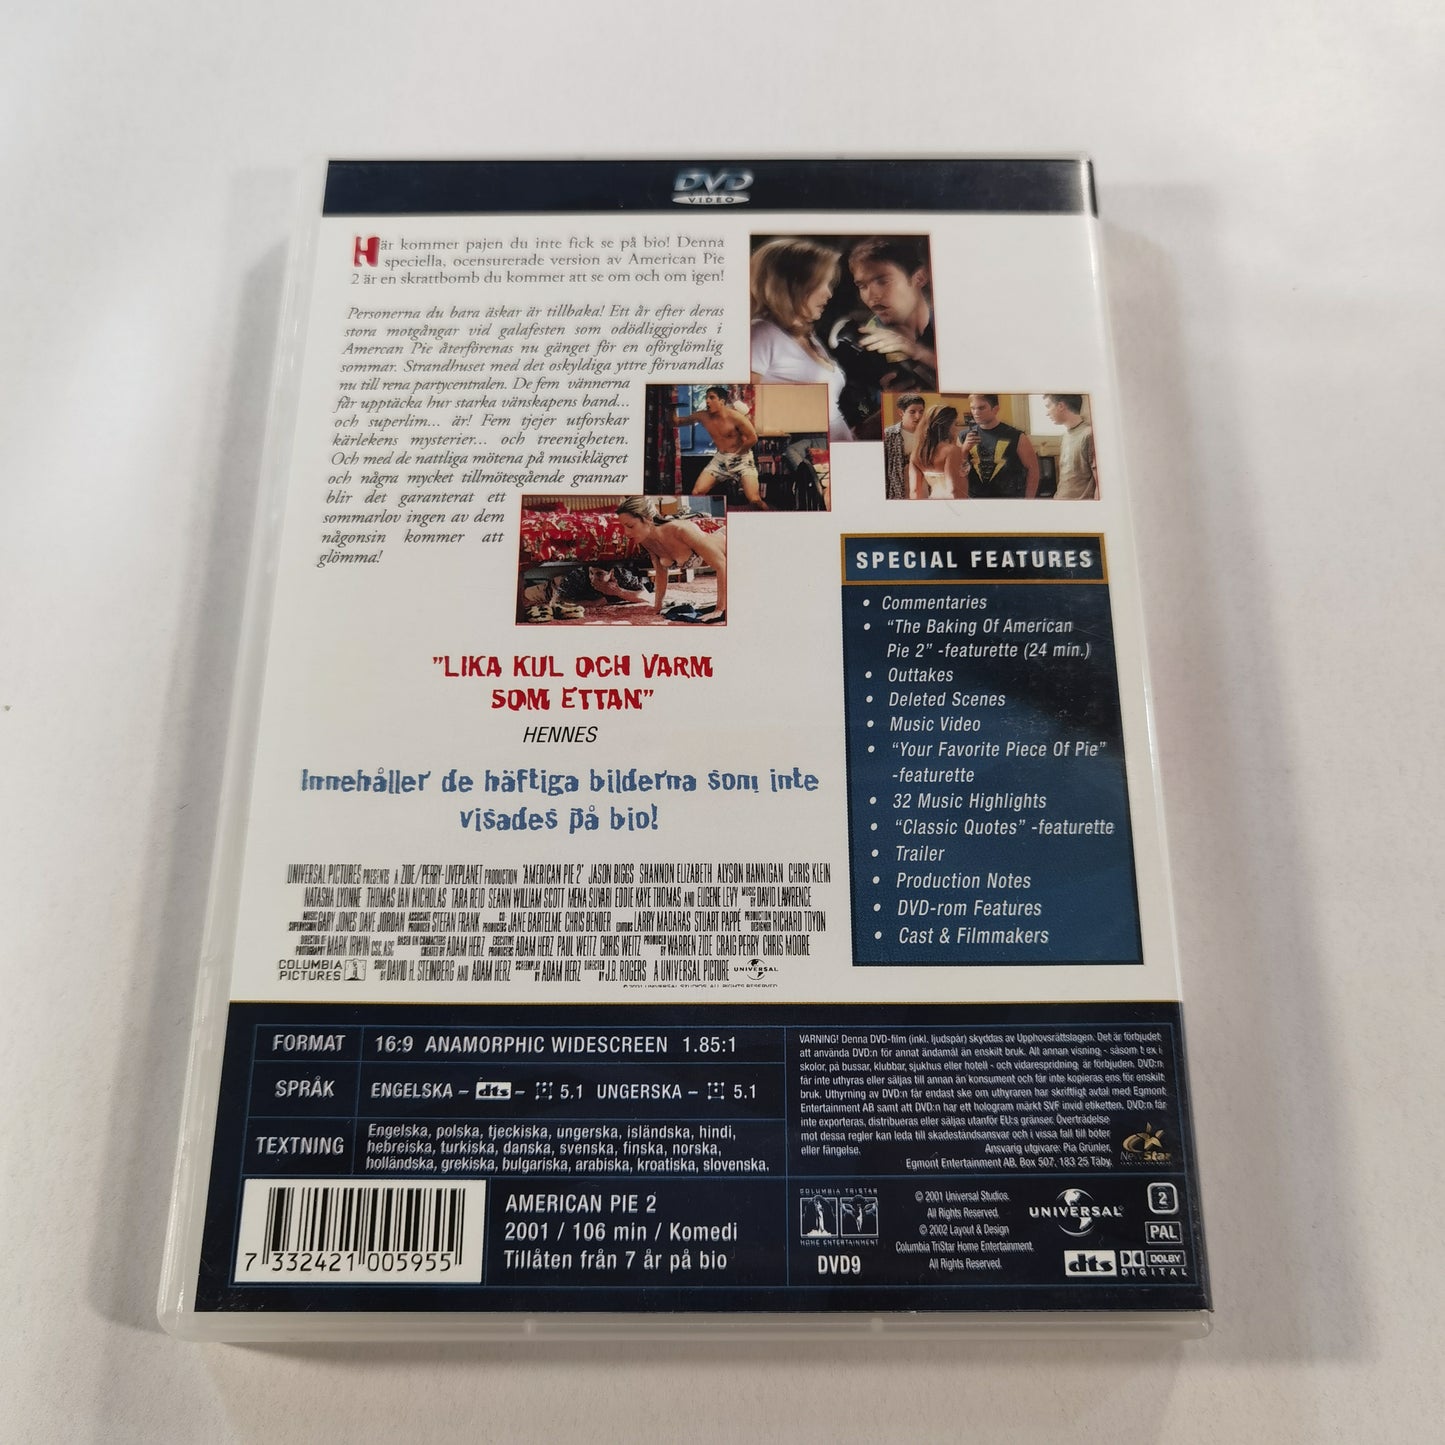 American Pie 2 (2001) - DVD SE 2002 Collector's Edition